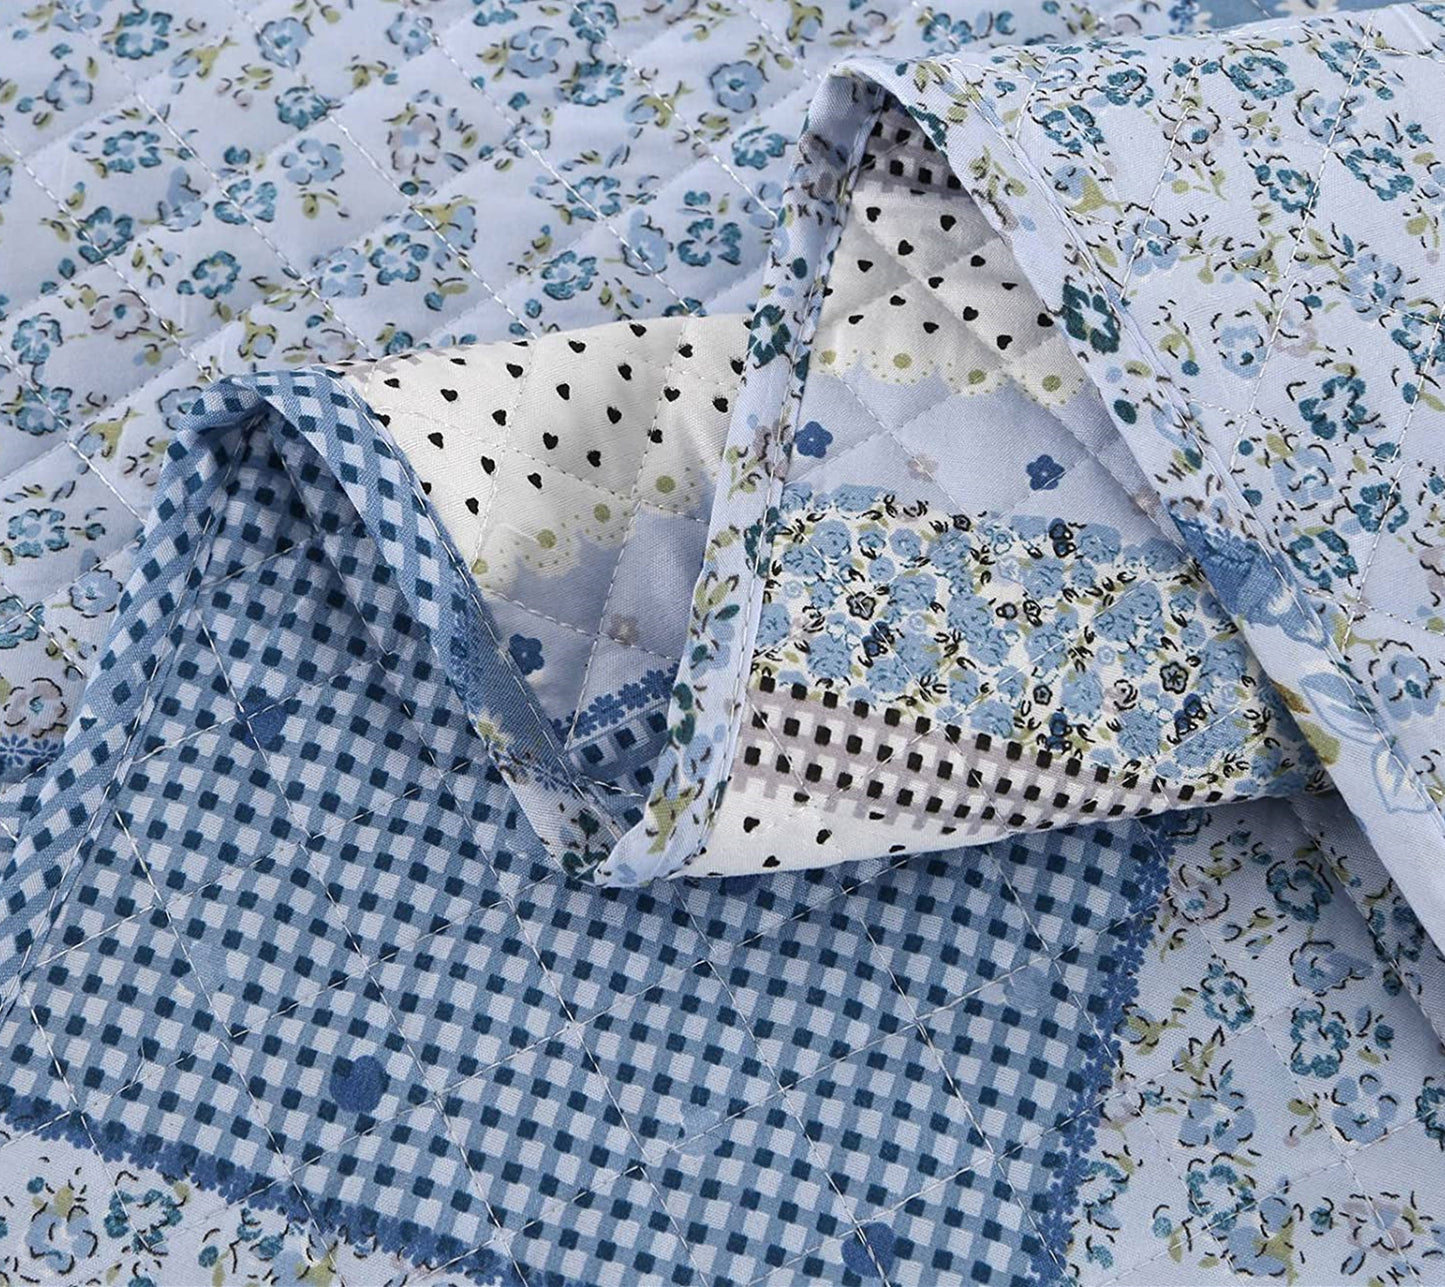 WongsBedding Blue Floral Patchwork Quilt Bedspread Sets 3 Pieces Quilt Set With 2 Pillowshams